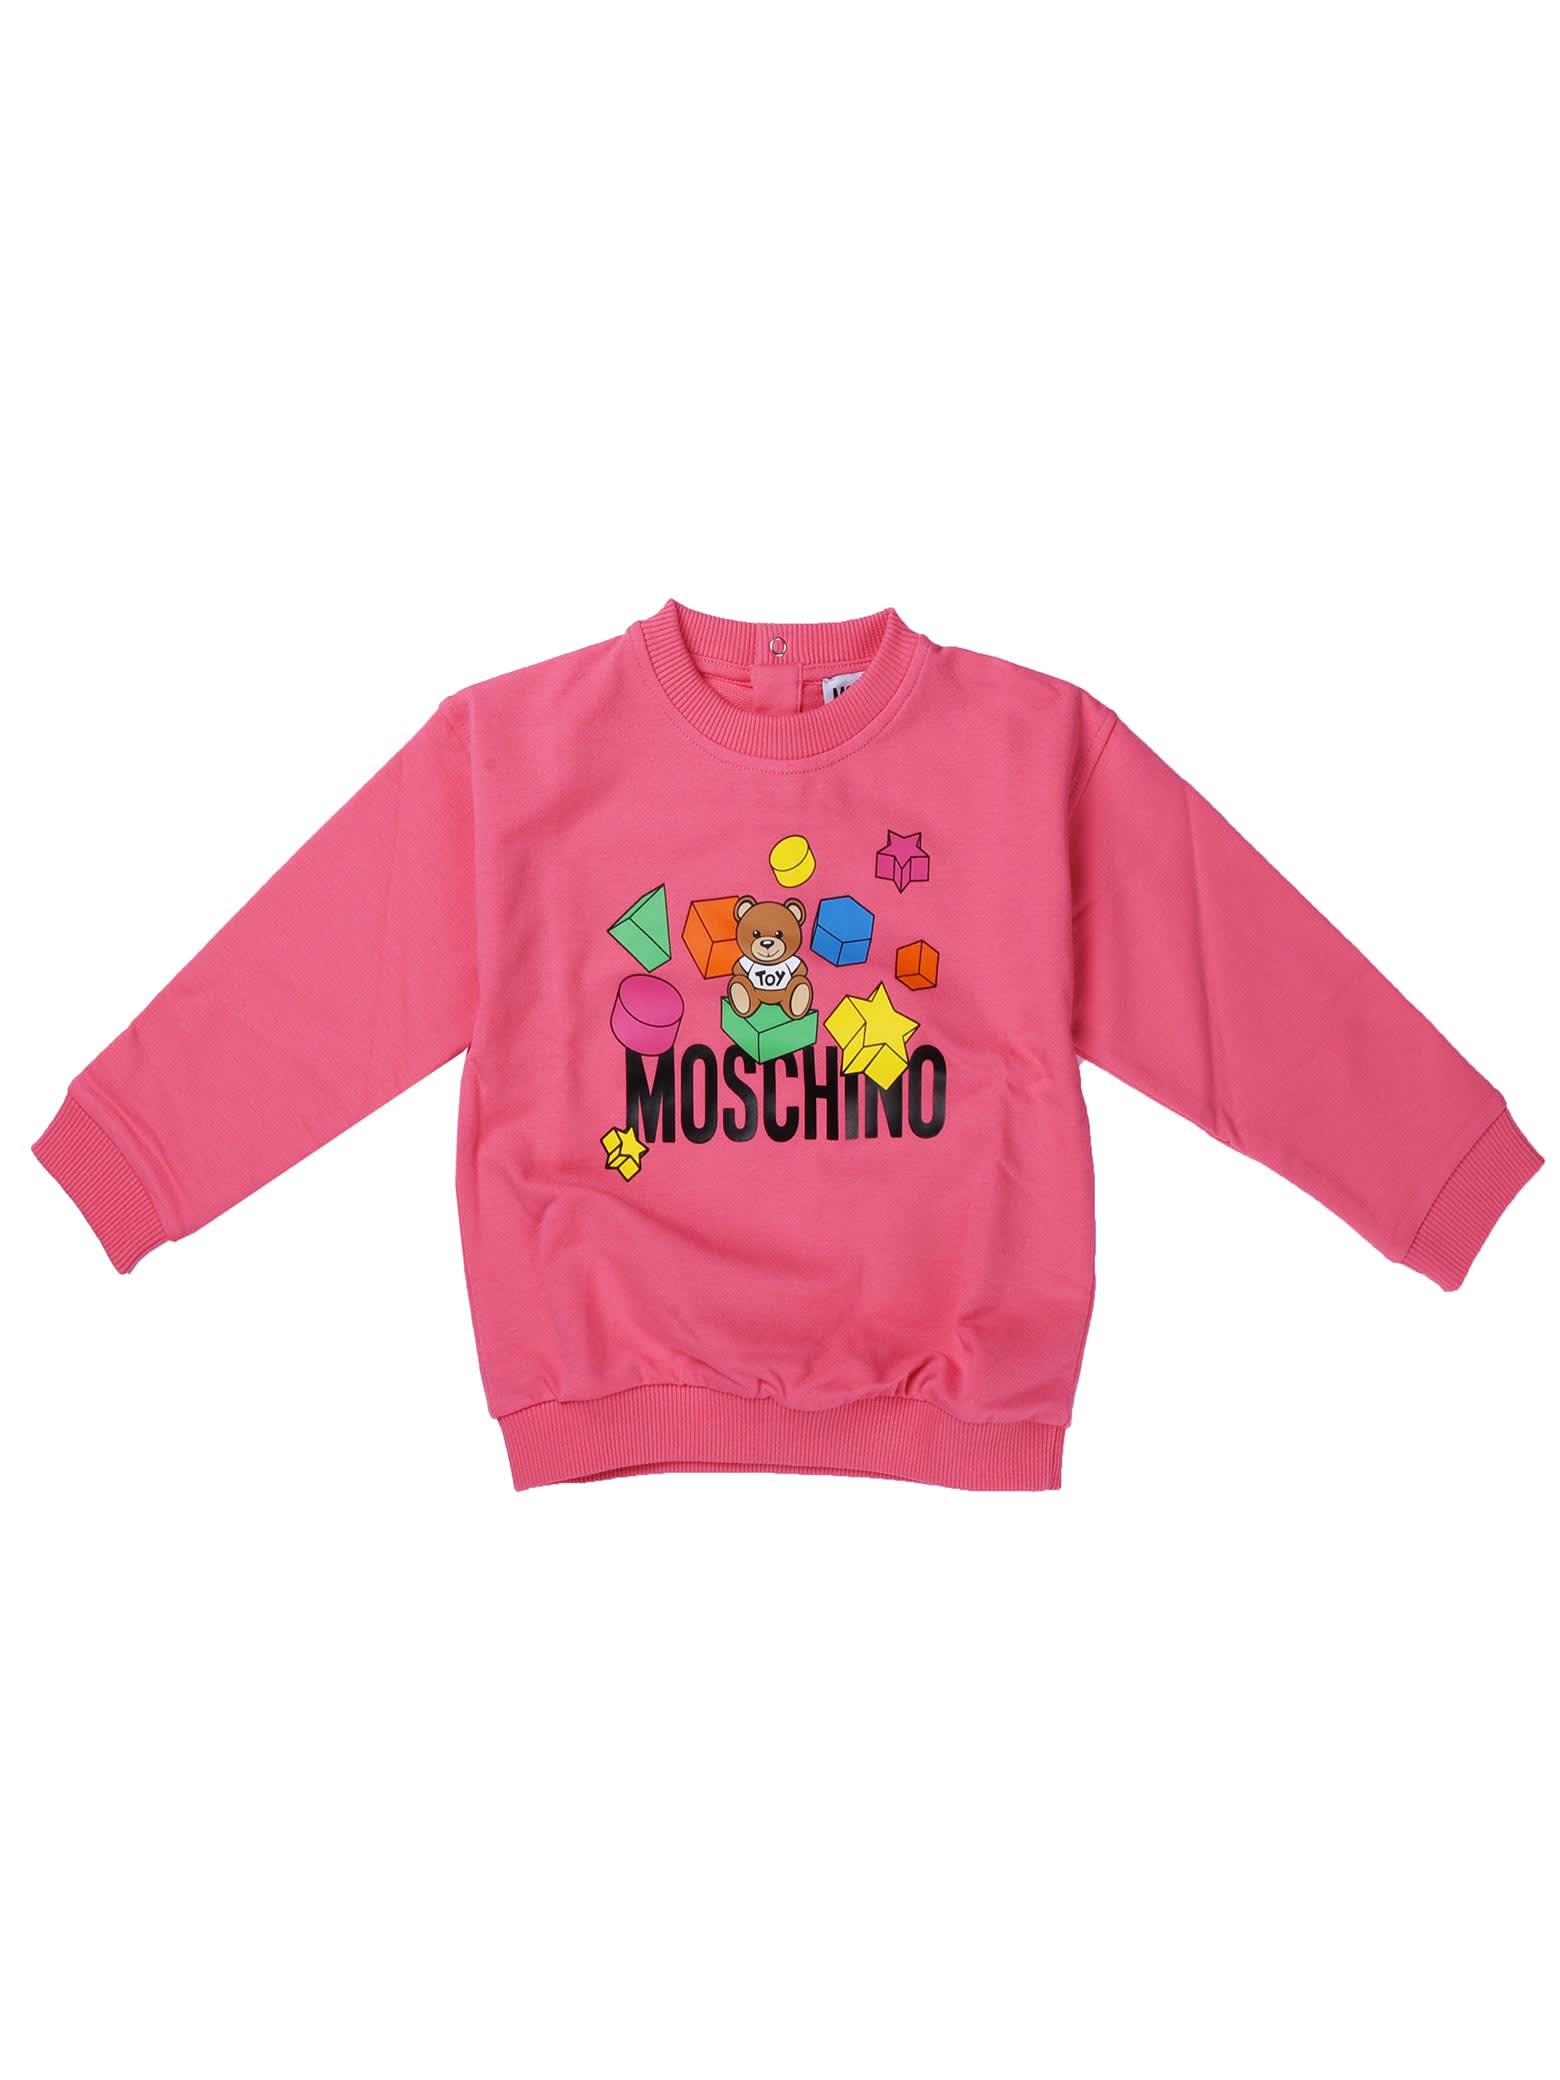 Moschino Pink Camelia Crew Neck Sweatshirt